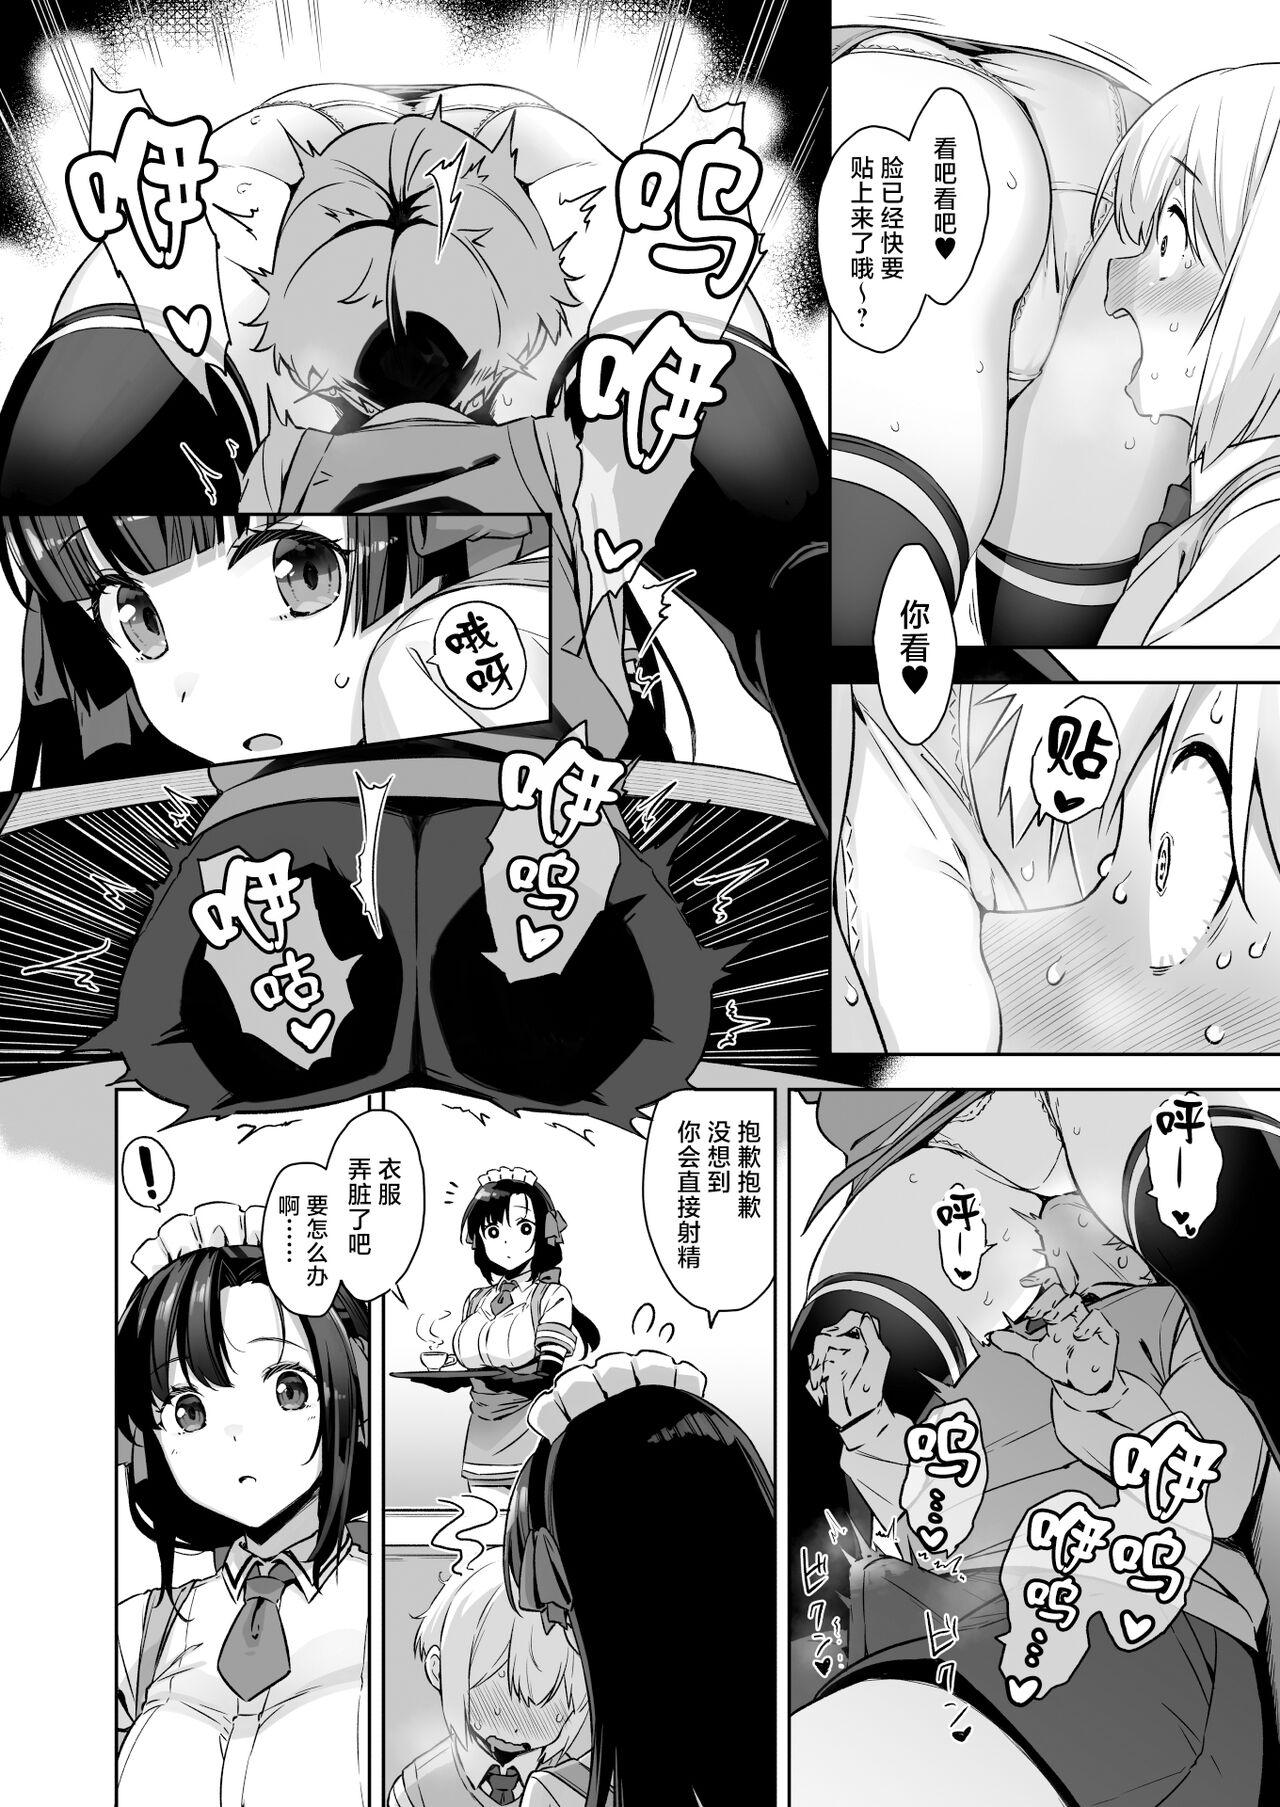 Omake Manga 7